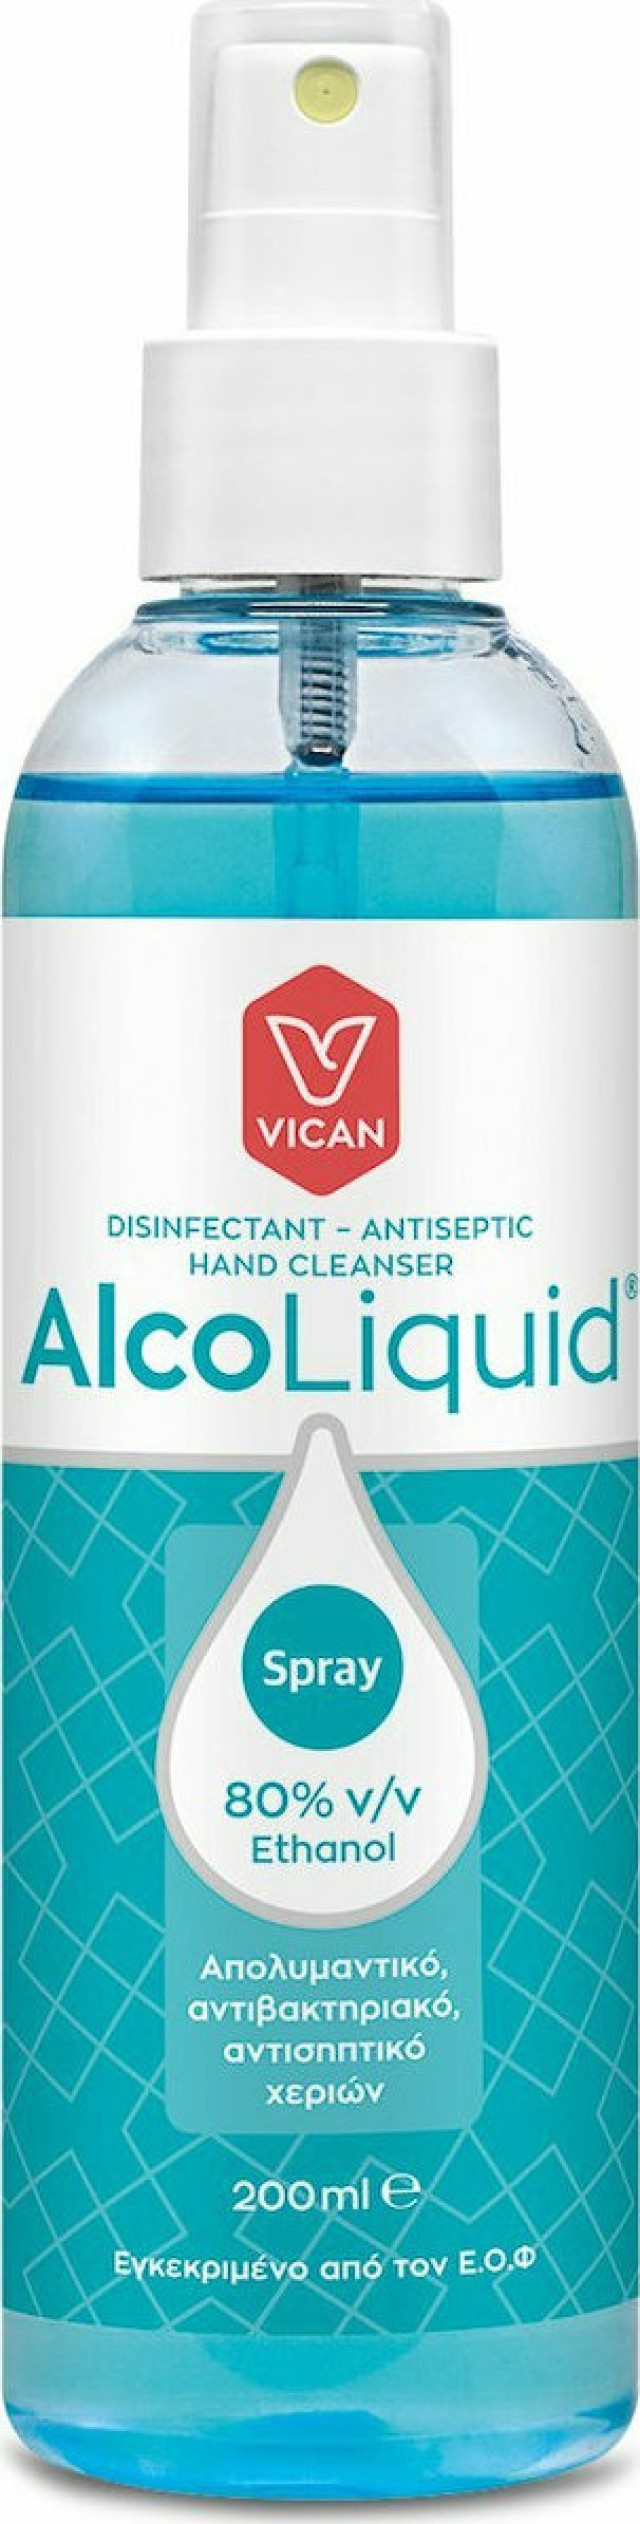 Vican AlcoLiquid Απολυμαντικό - Αντισηπτικό Χεριών σε Μορφή Spray με 80% Οινόπνευμα 200ml